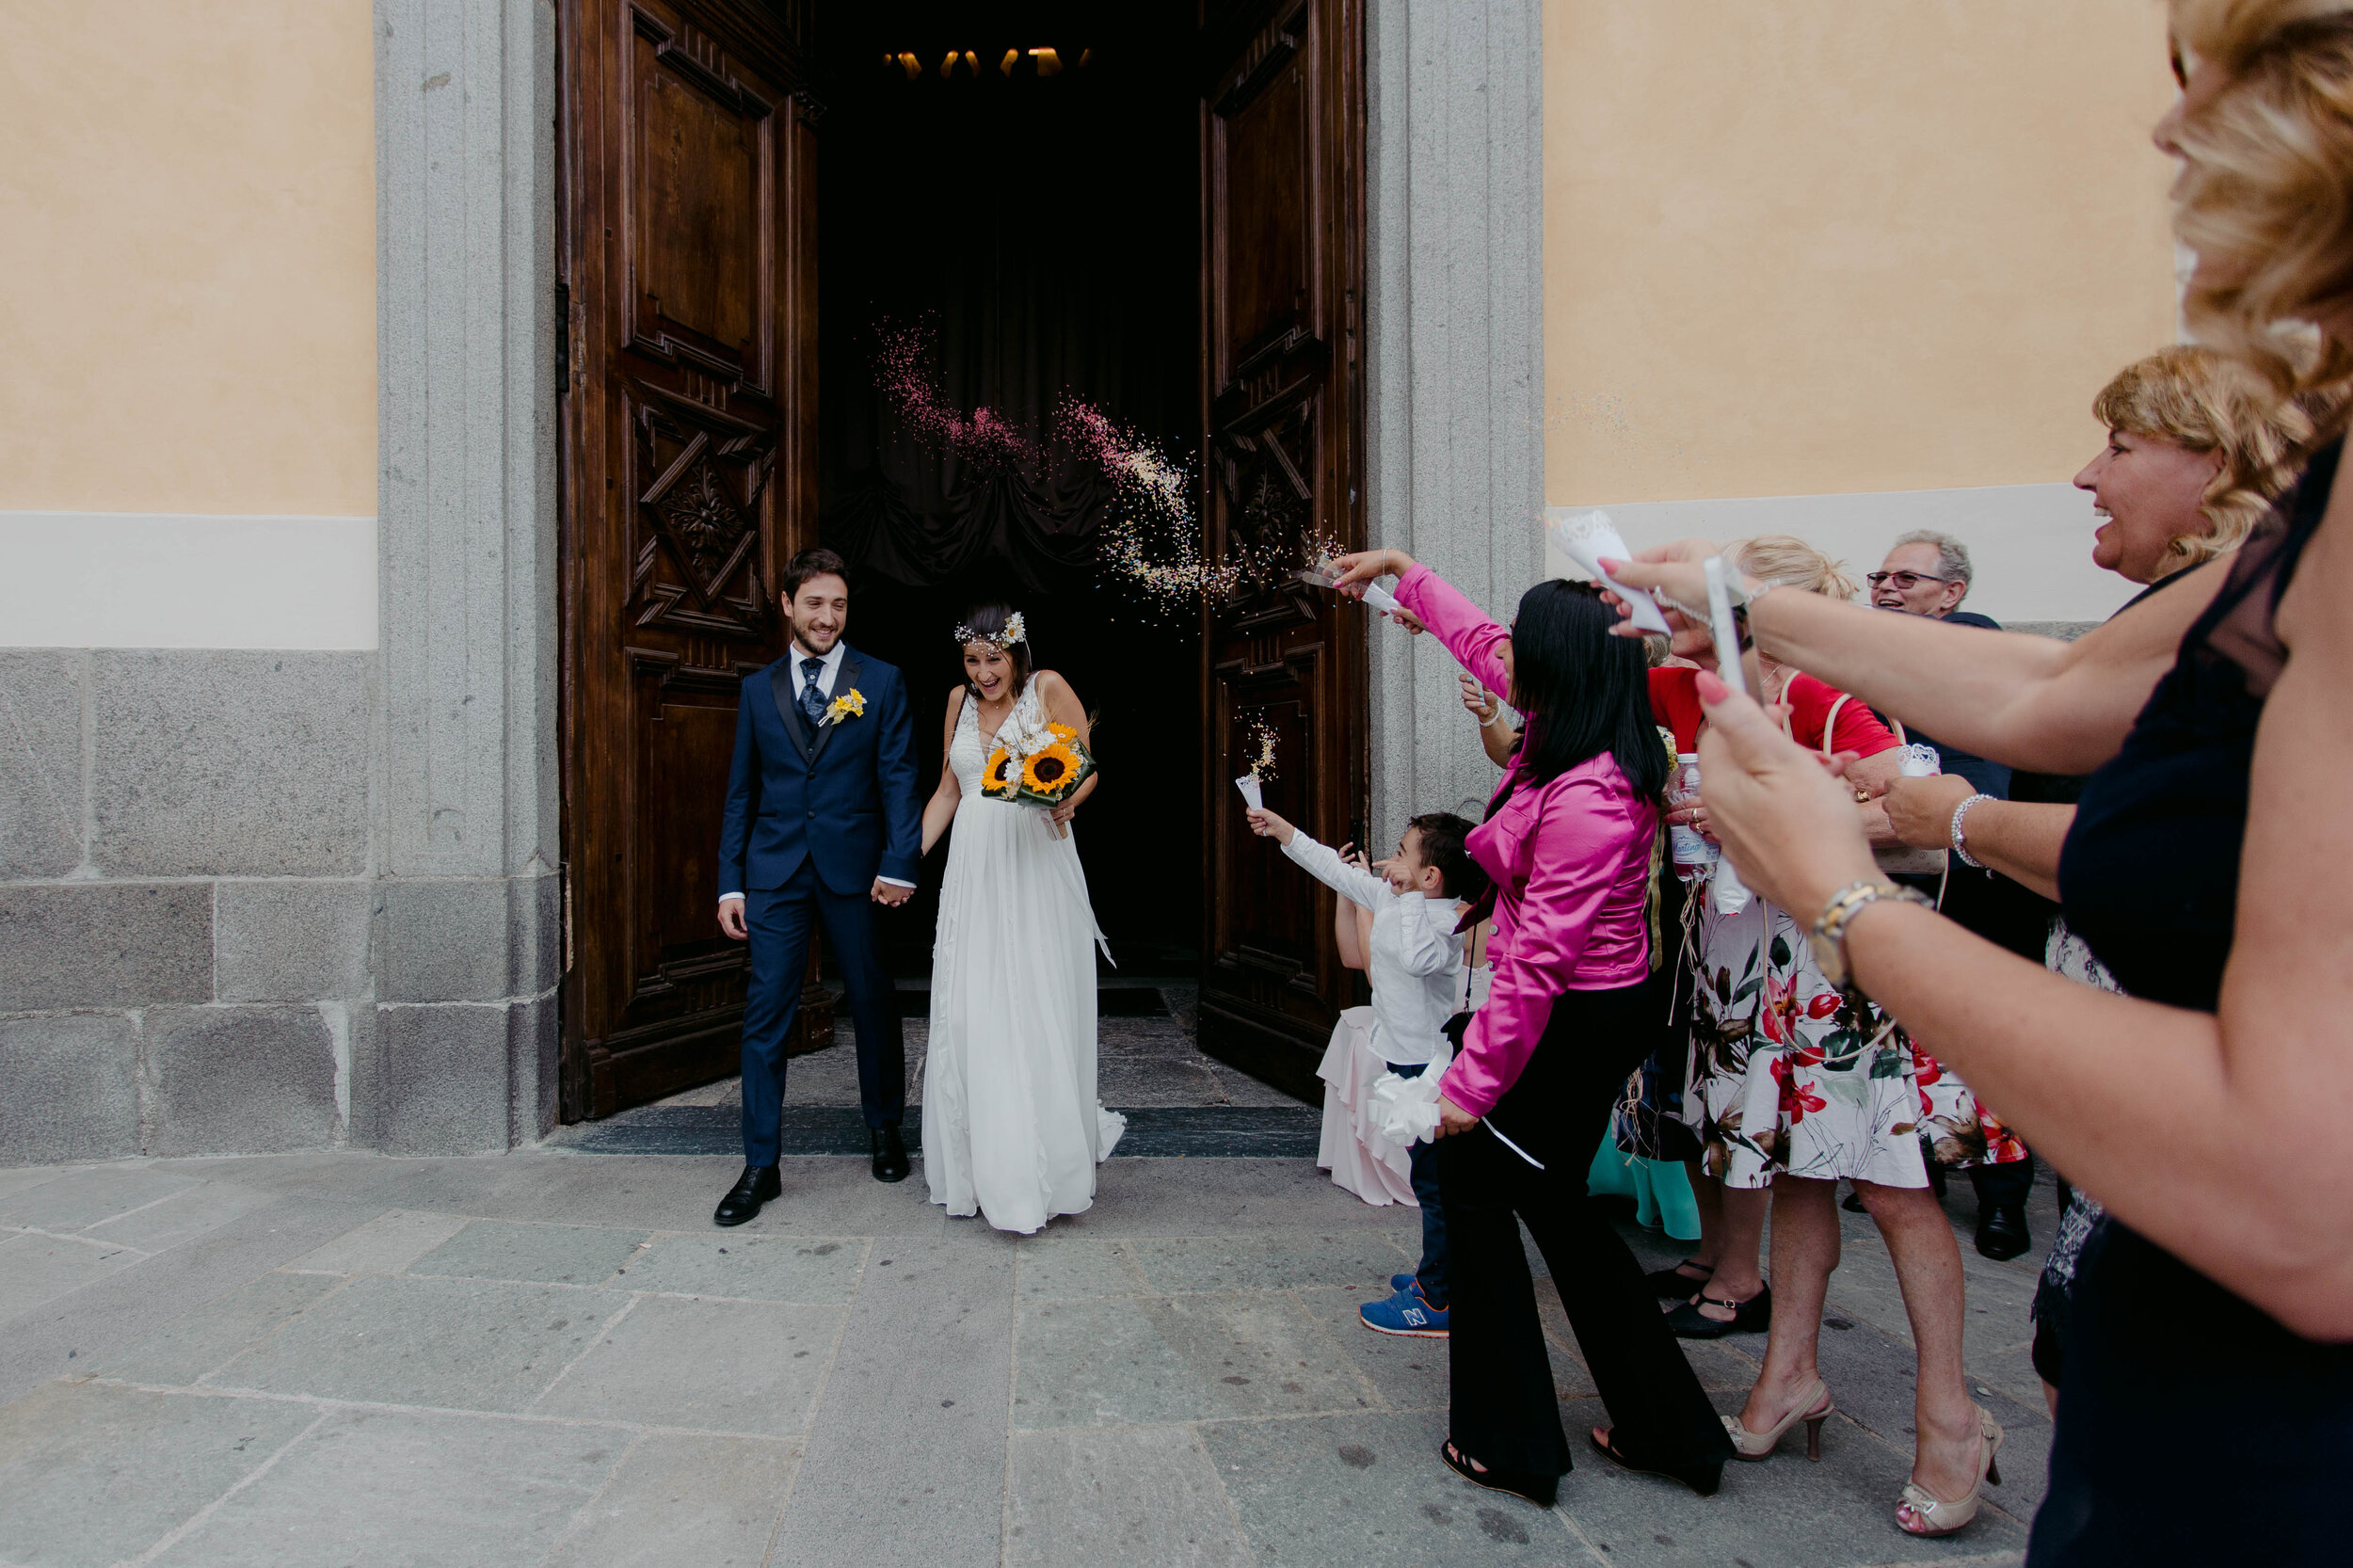 027 - Matrimonio a Cascina Rovet - Biella - Miriam Callegari Fotografa.JPG